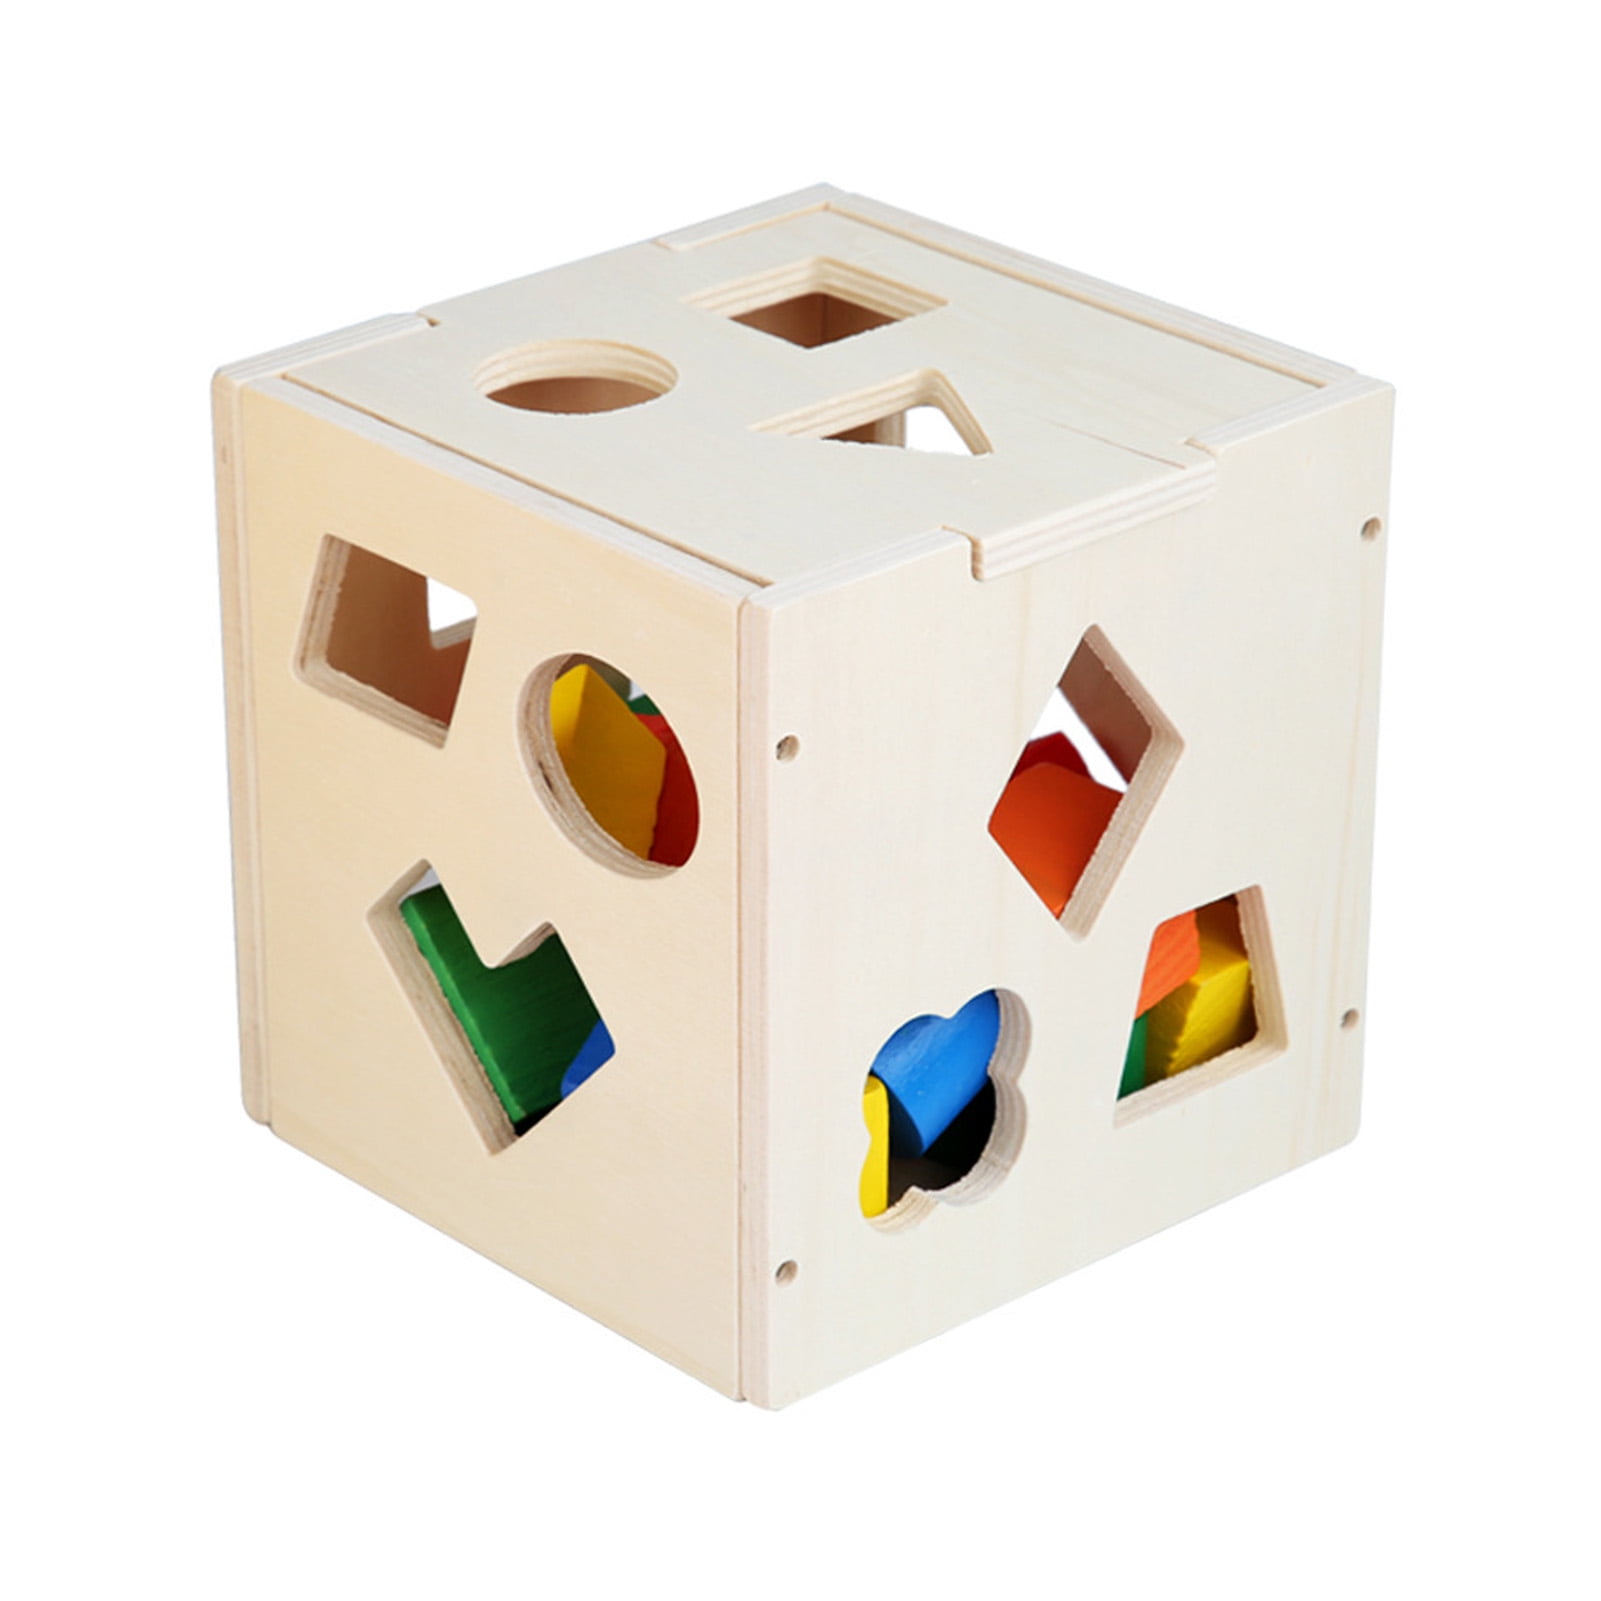 Shape-Sorter-Toys-Wooden-Kids-Sorting-Toy-15-Holes-Building-Block-Cube-Box-Geometric-Shapes-Matching-Toddlers-Kids-Gift-Girls-Boys-2-4_da3e81b5-6884-472f-addf-ca6c4683f871.f89f38730f241449241ec38542a9d598.jpeg